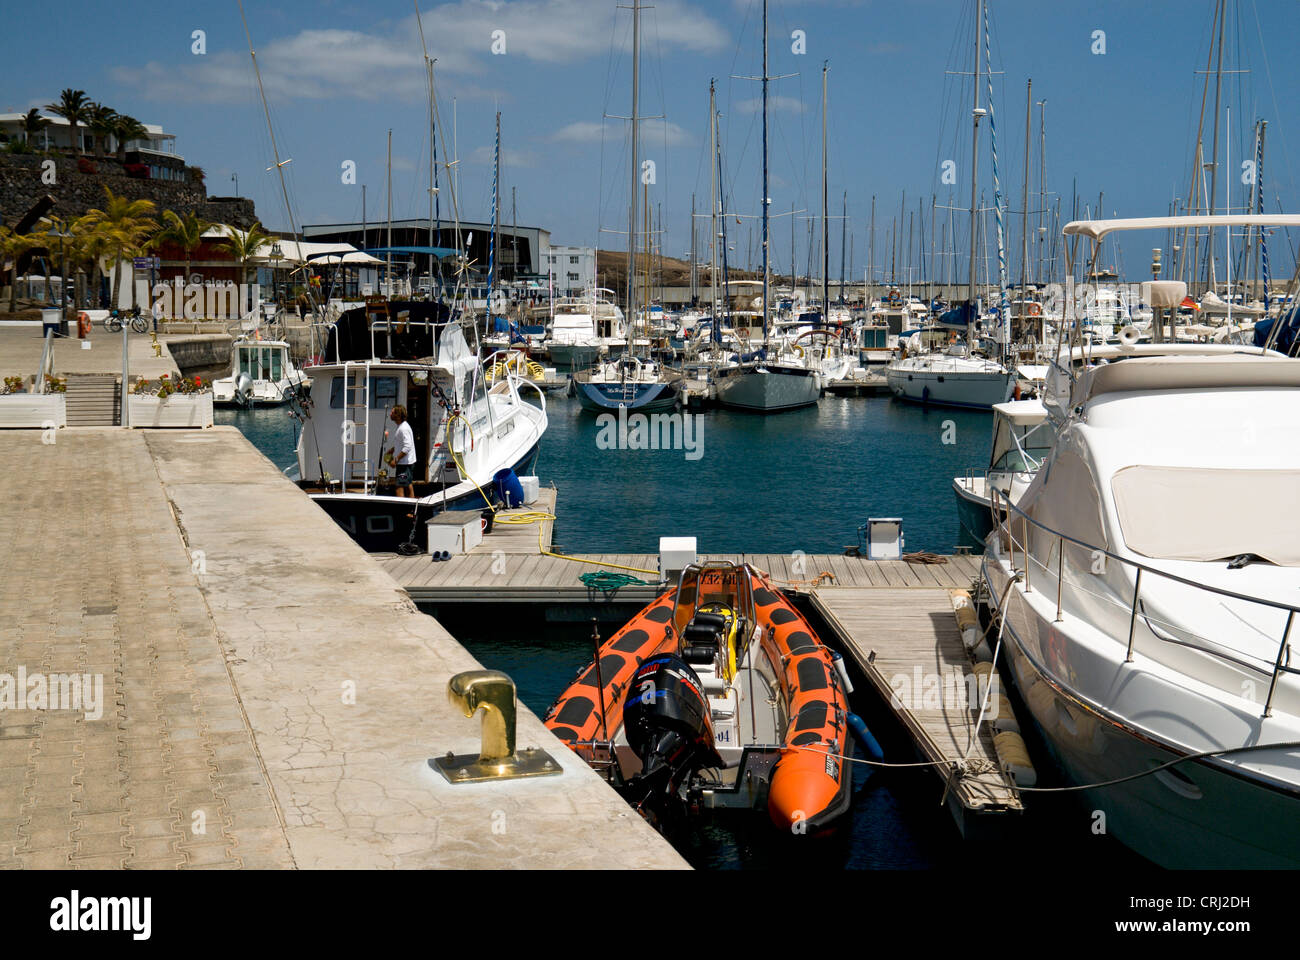 Boats moored in harbour, Puerto Calero, Lanzarote, Canary Islands, Spain Stock Photo